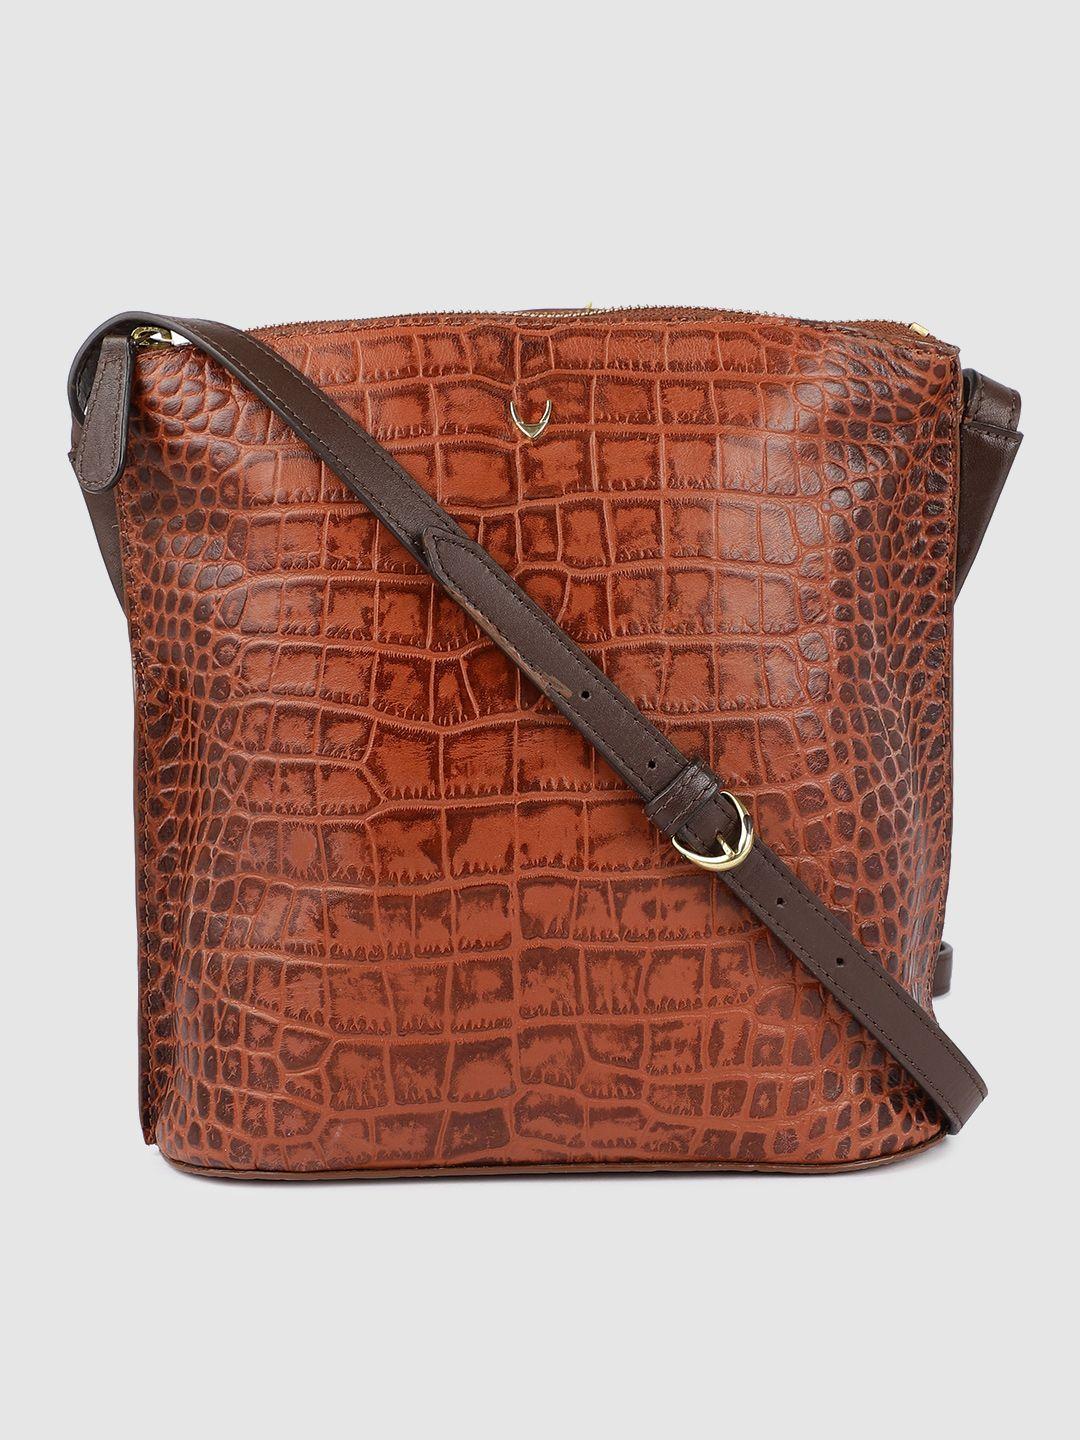 hidesign tan brown scorpio croc textured leather sling bag